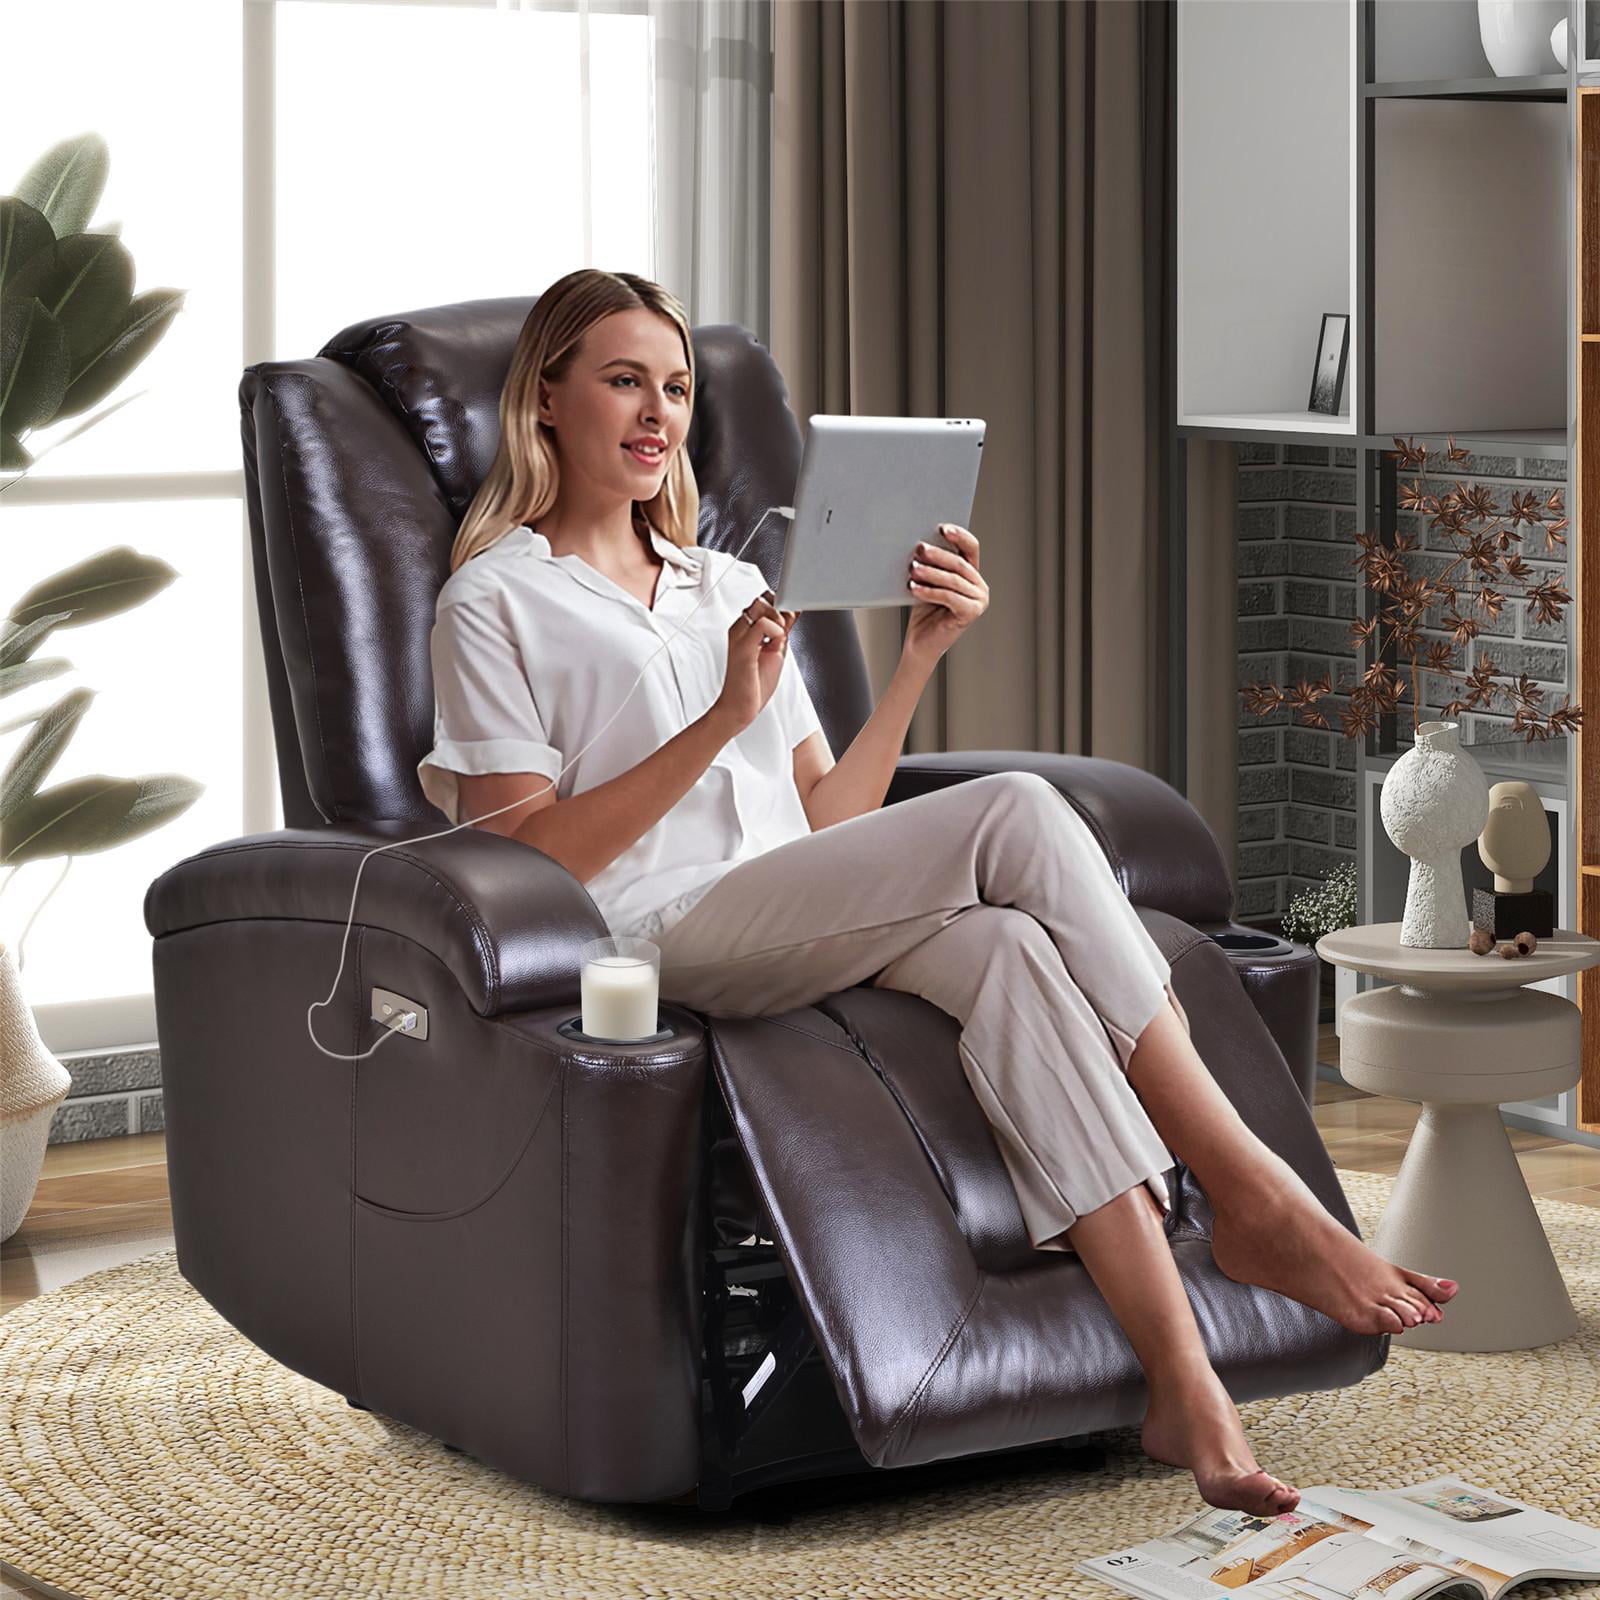 UR livingroom Genuine Leather Dual Power Recliner Chair with Adjustable  Headrest,USB C Charger,Type C Port (Hubert, Brown)